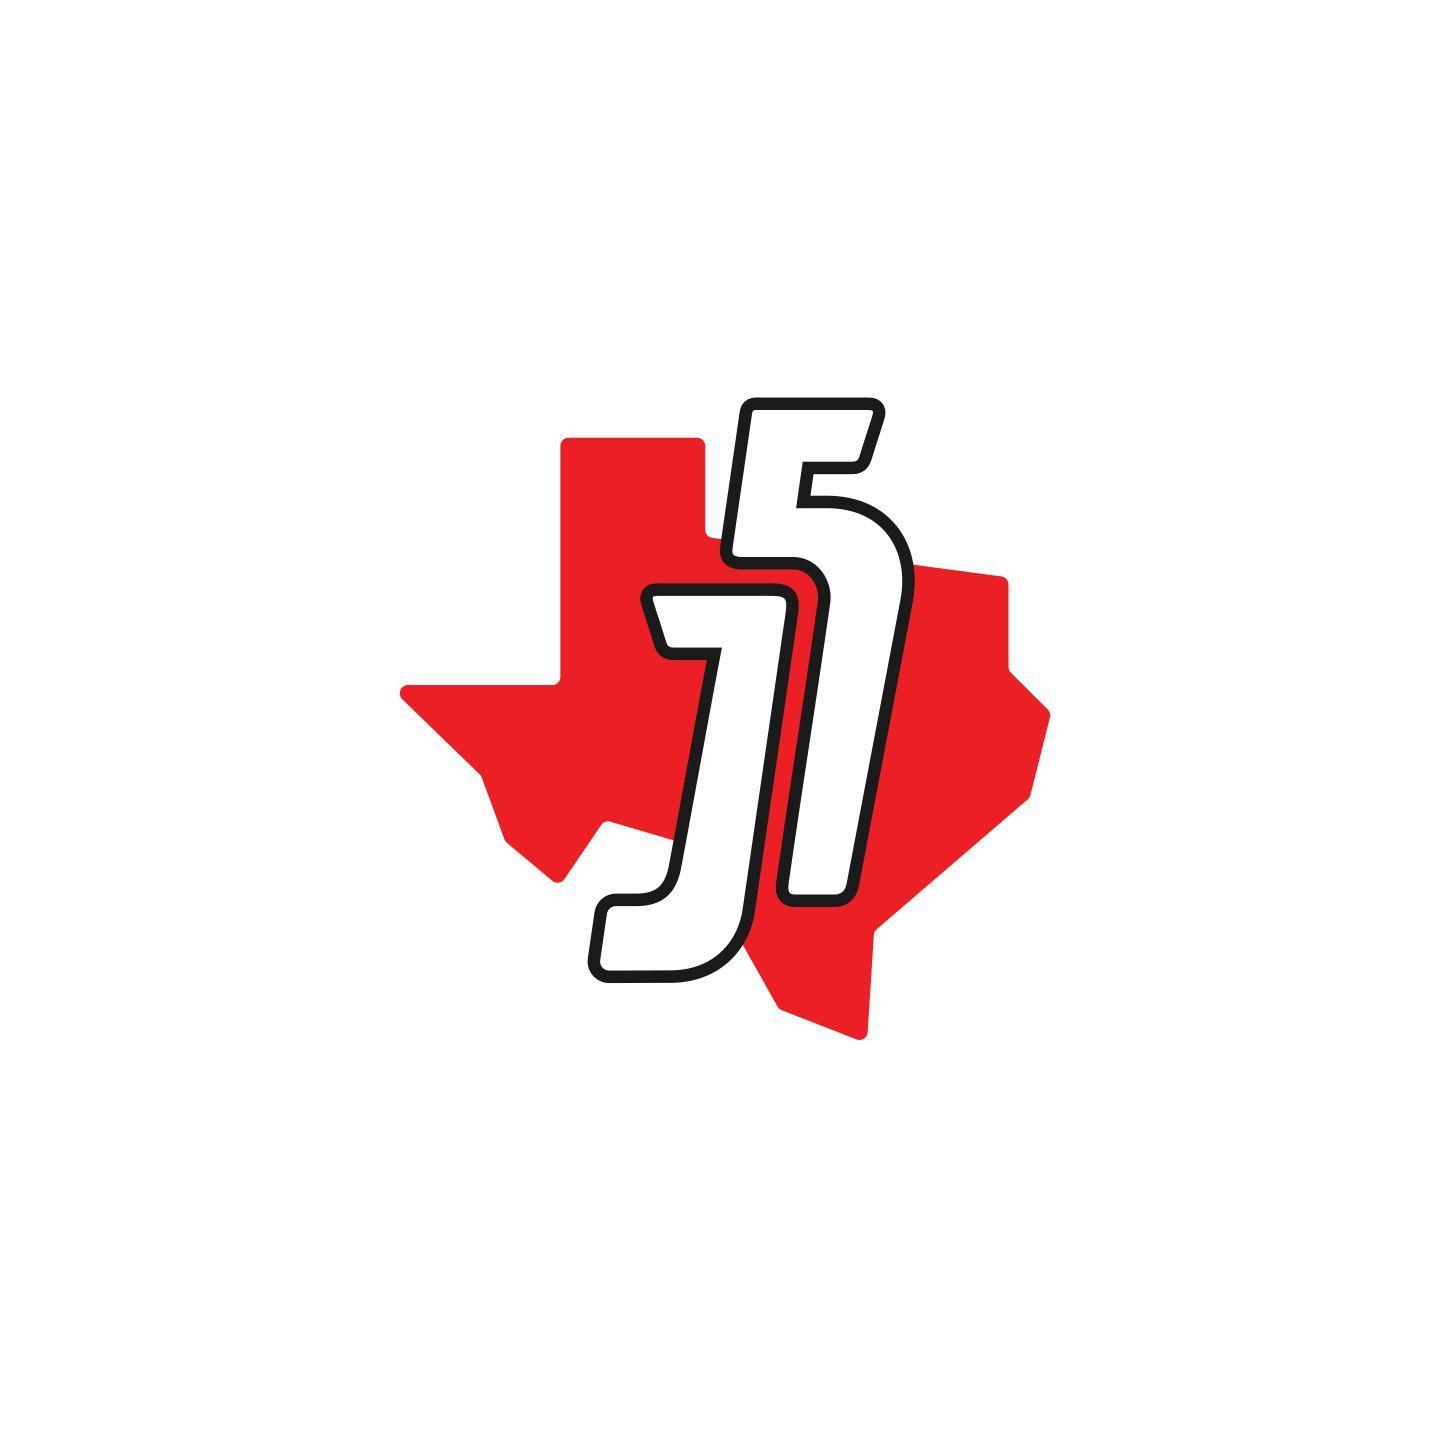 J5 Logo - Bold, Professional, Farm Equipment Logo Design for J5 by wiktor.ares ...